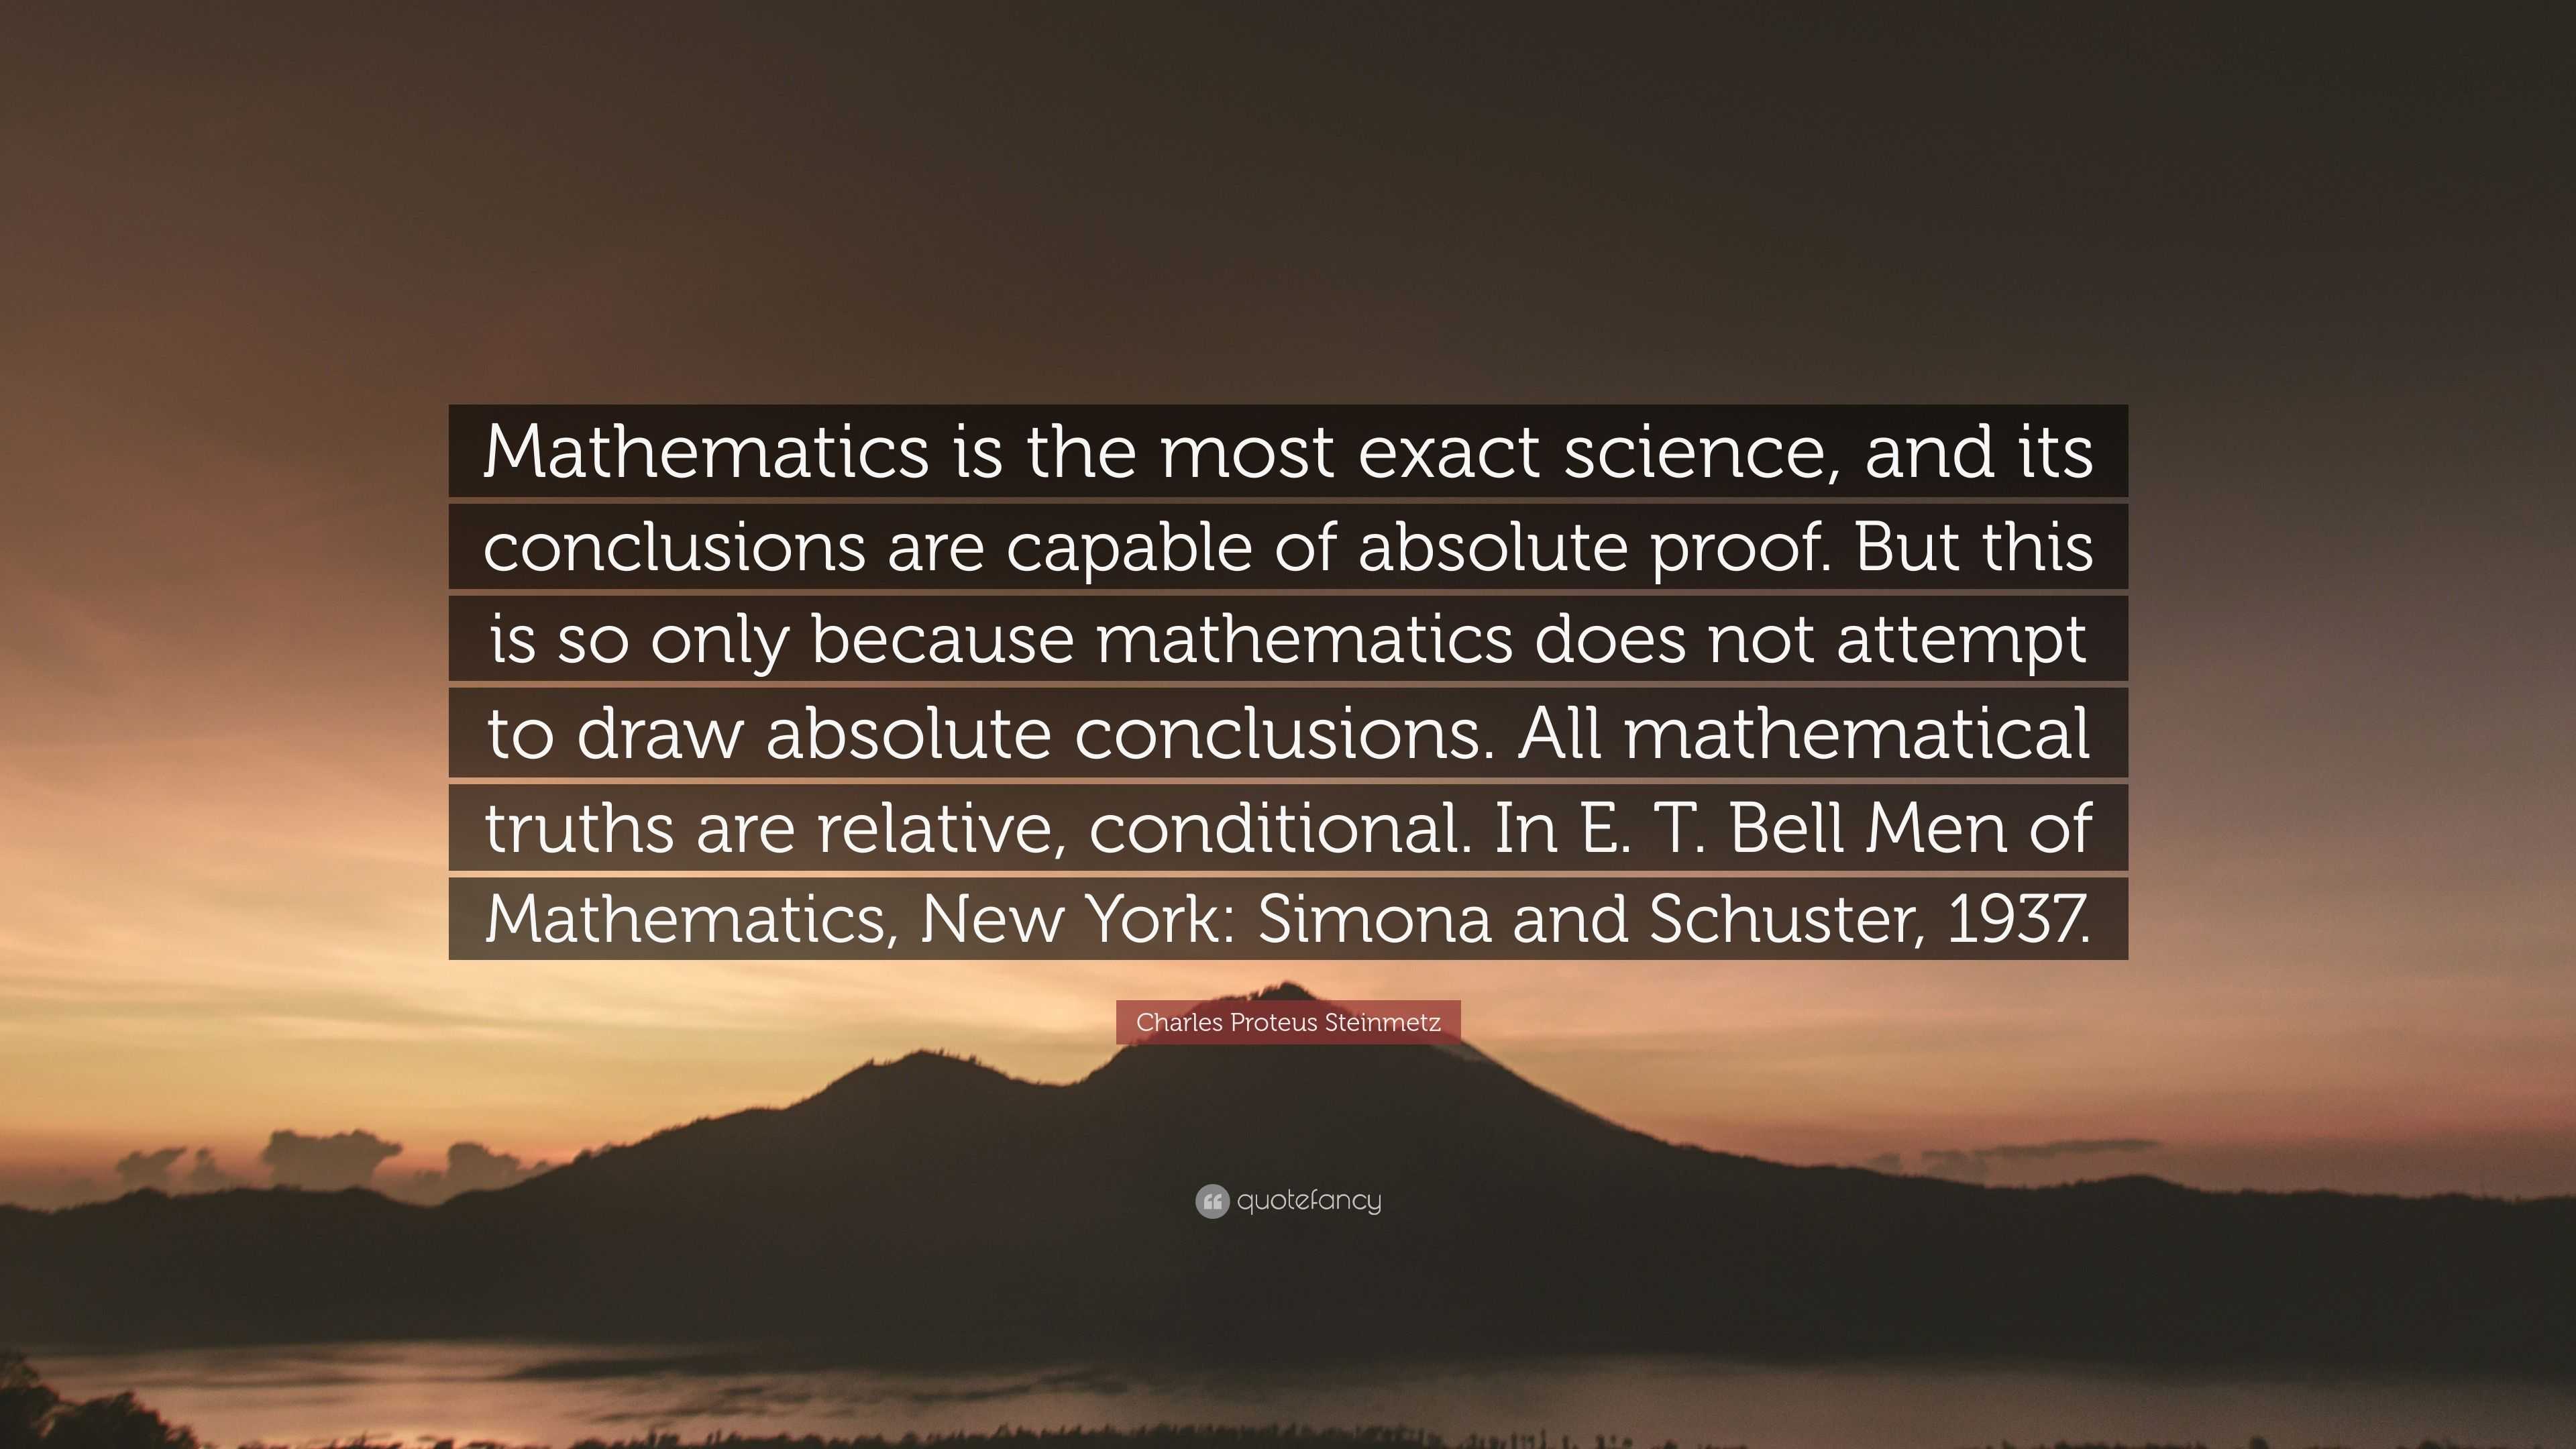 Charles Proteus Steinmetz Quote “Mathematics is the most exact science